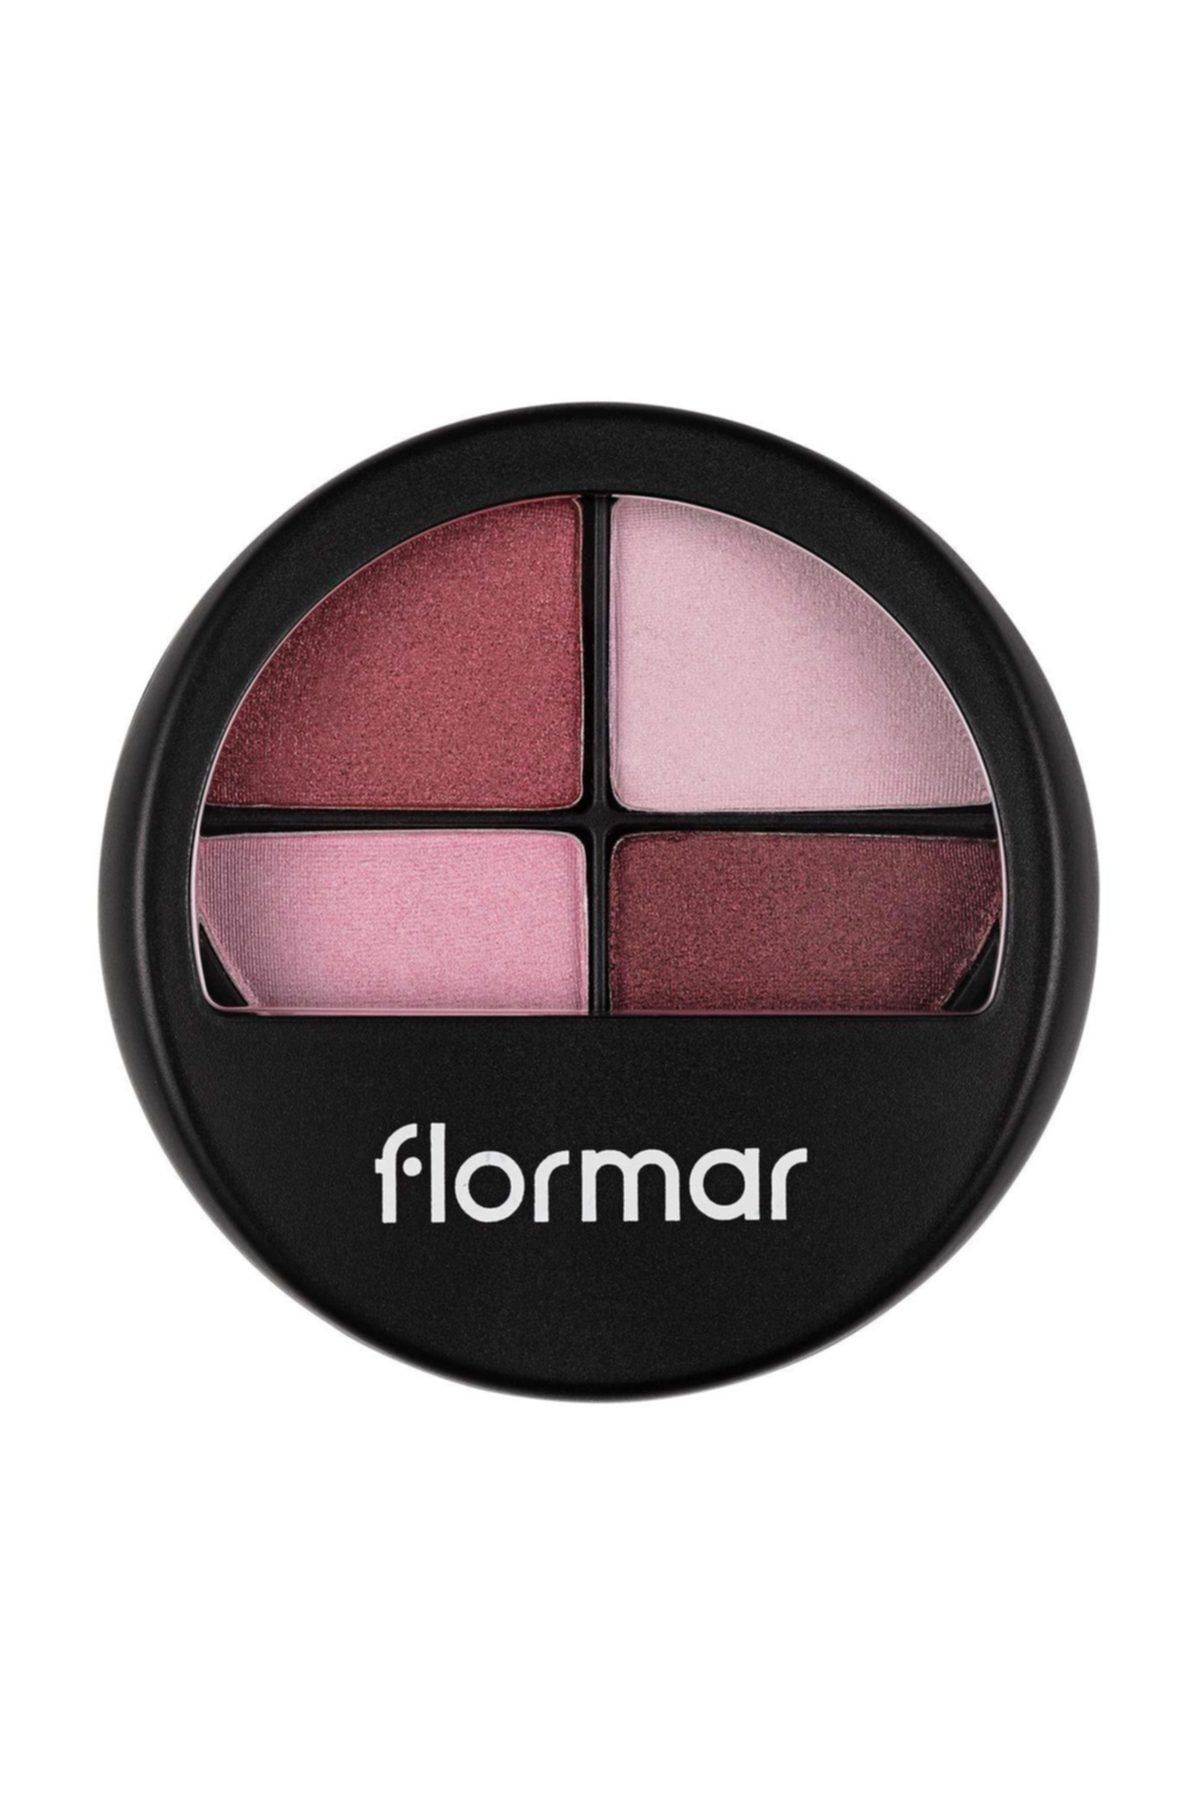 Flormar چهارگوشه سایه چشم رنگارنگ با رنگ صورتی 402